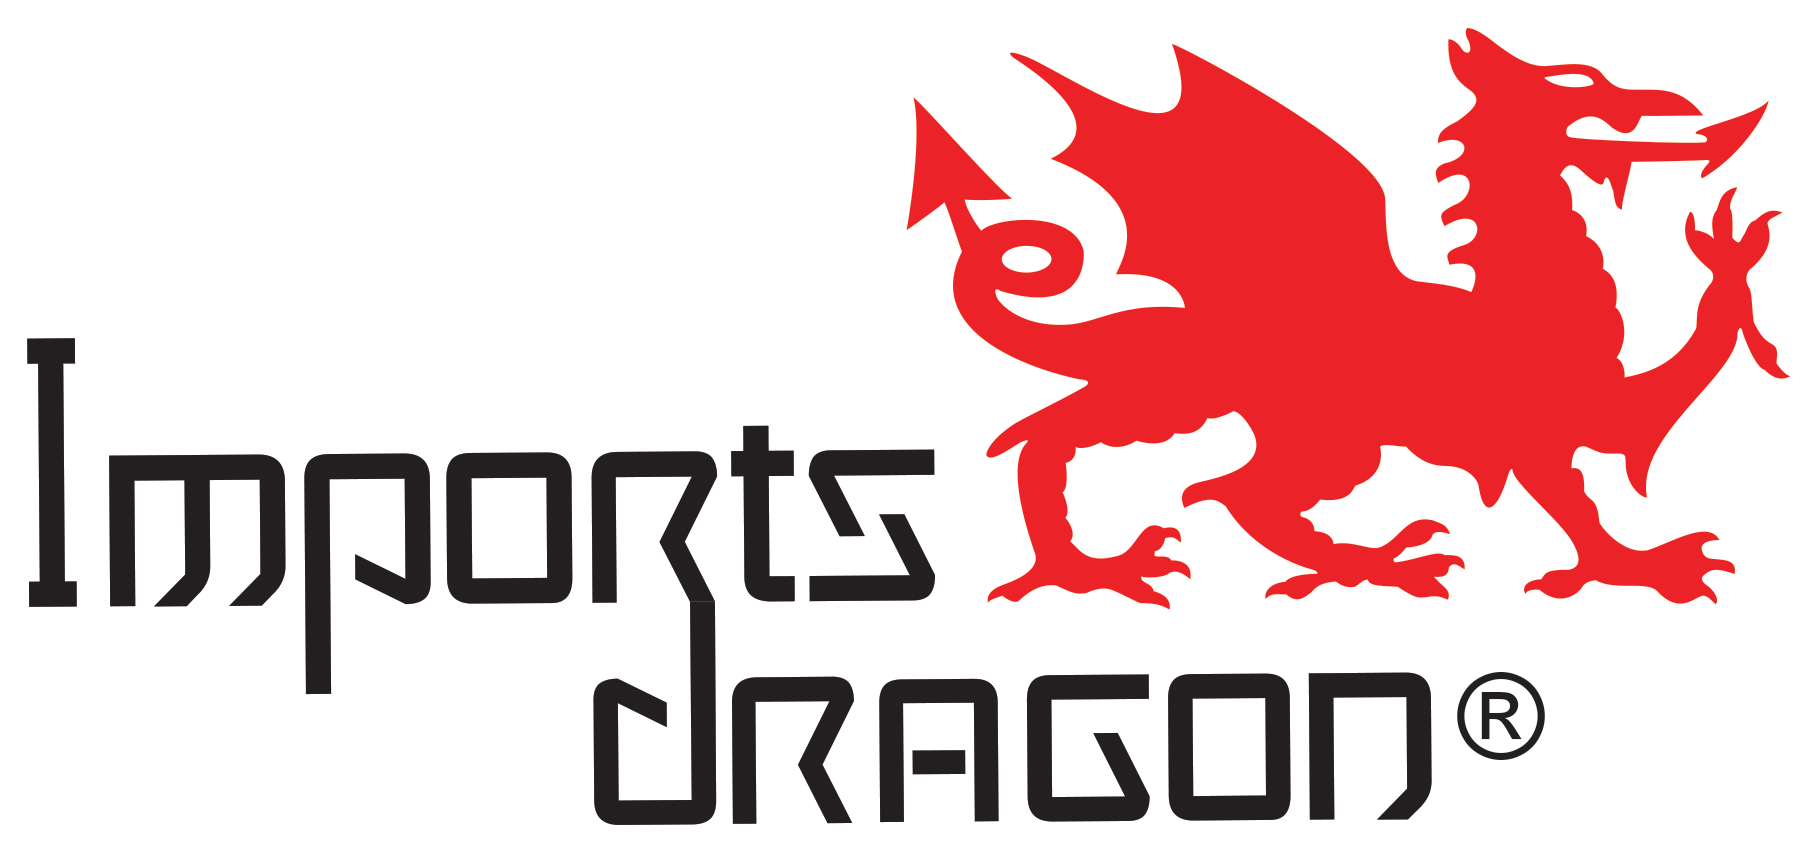 Imports Dragon